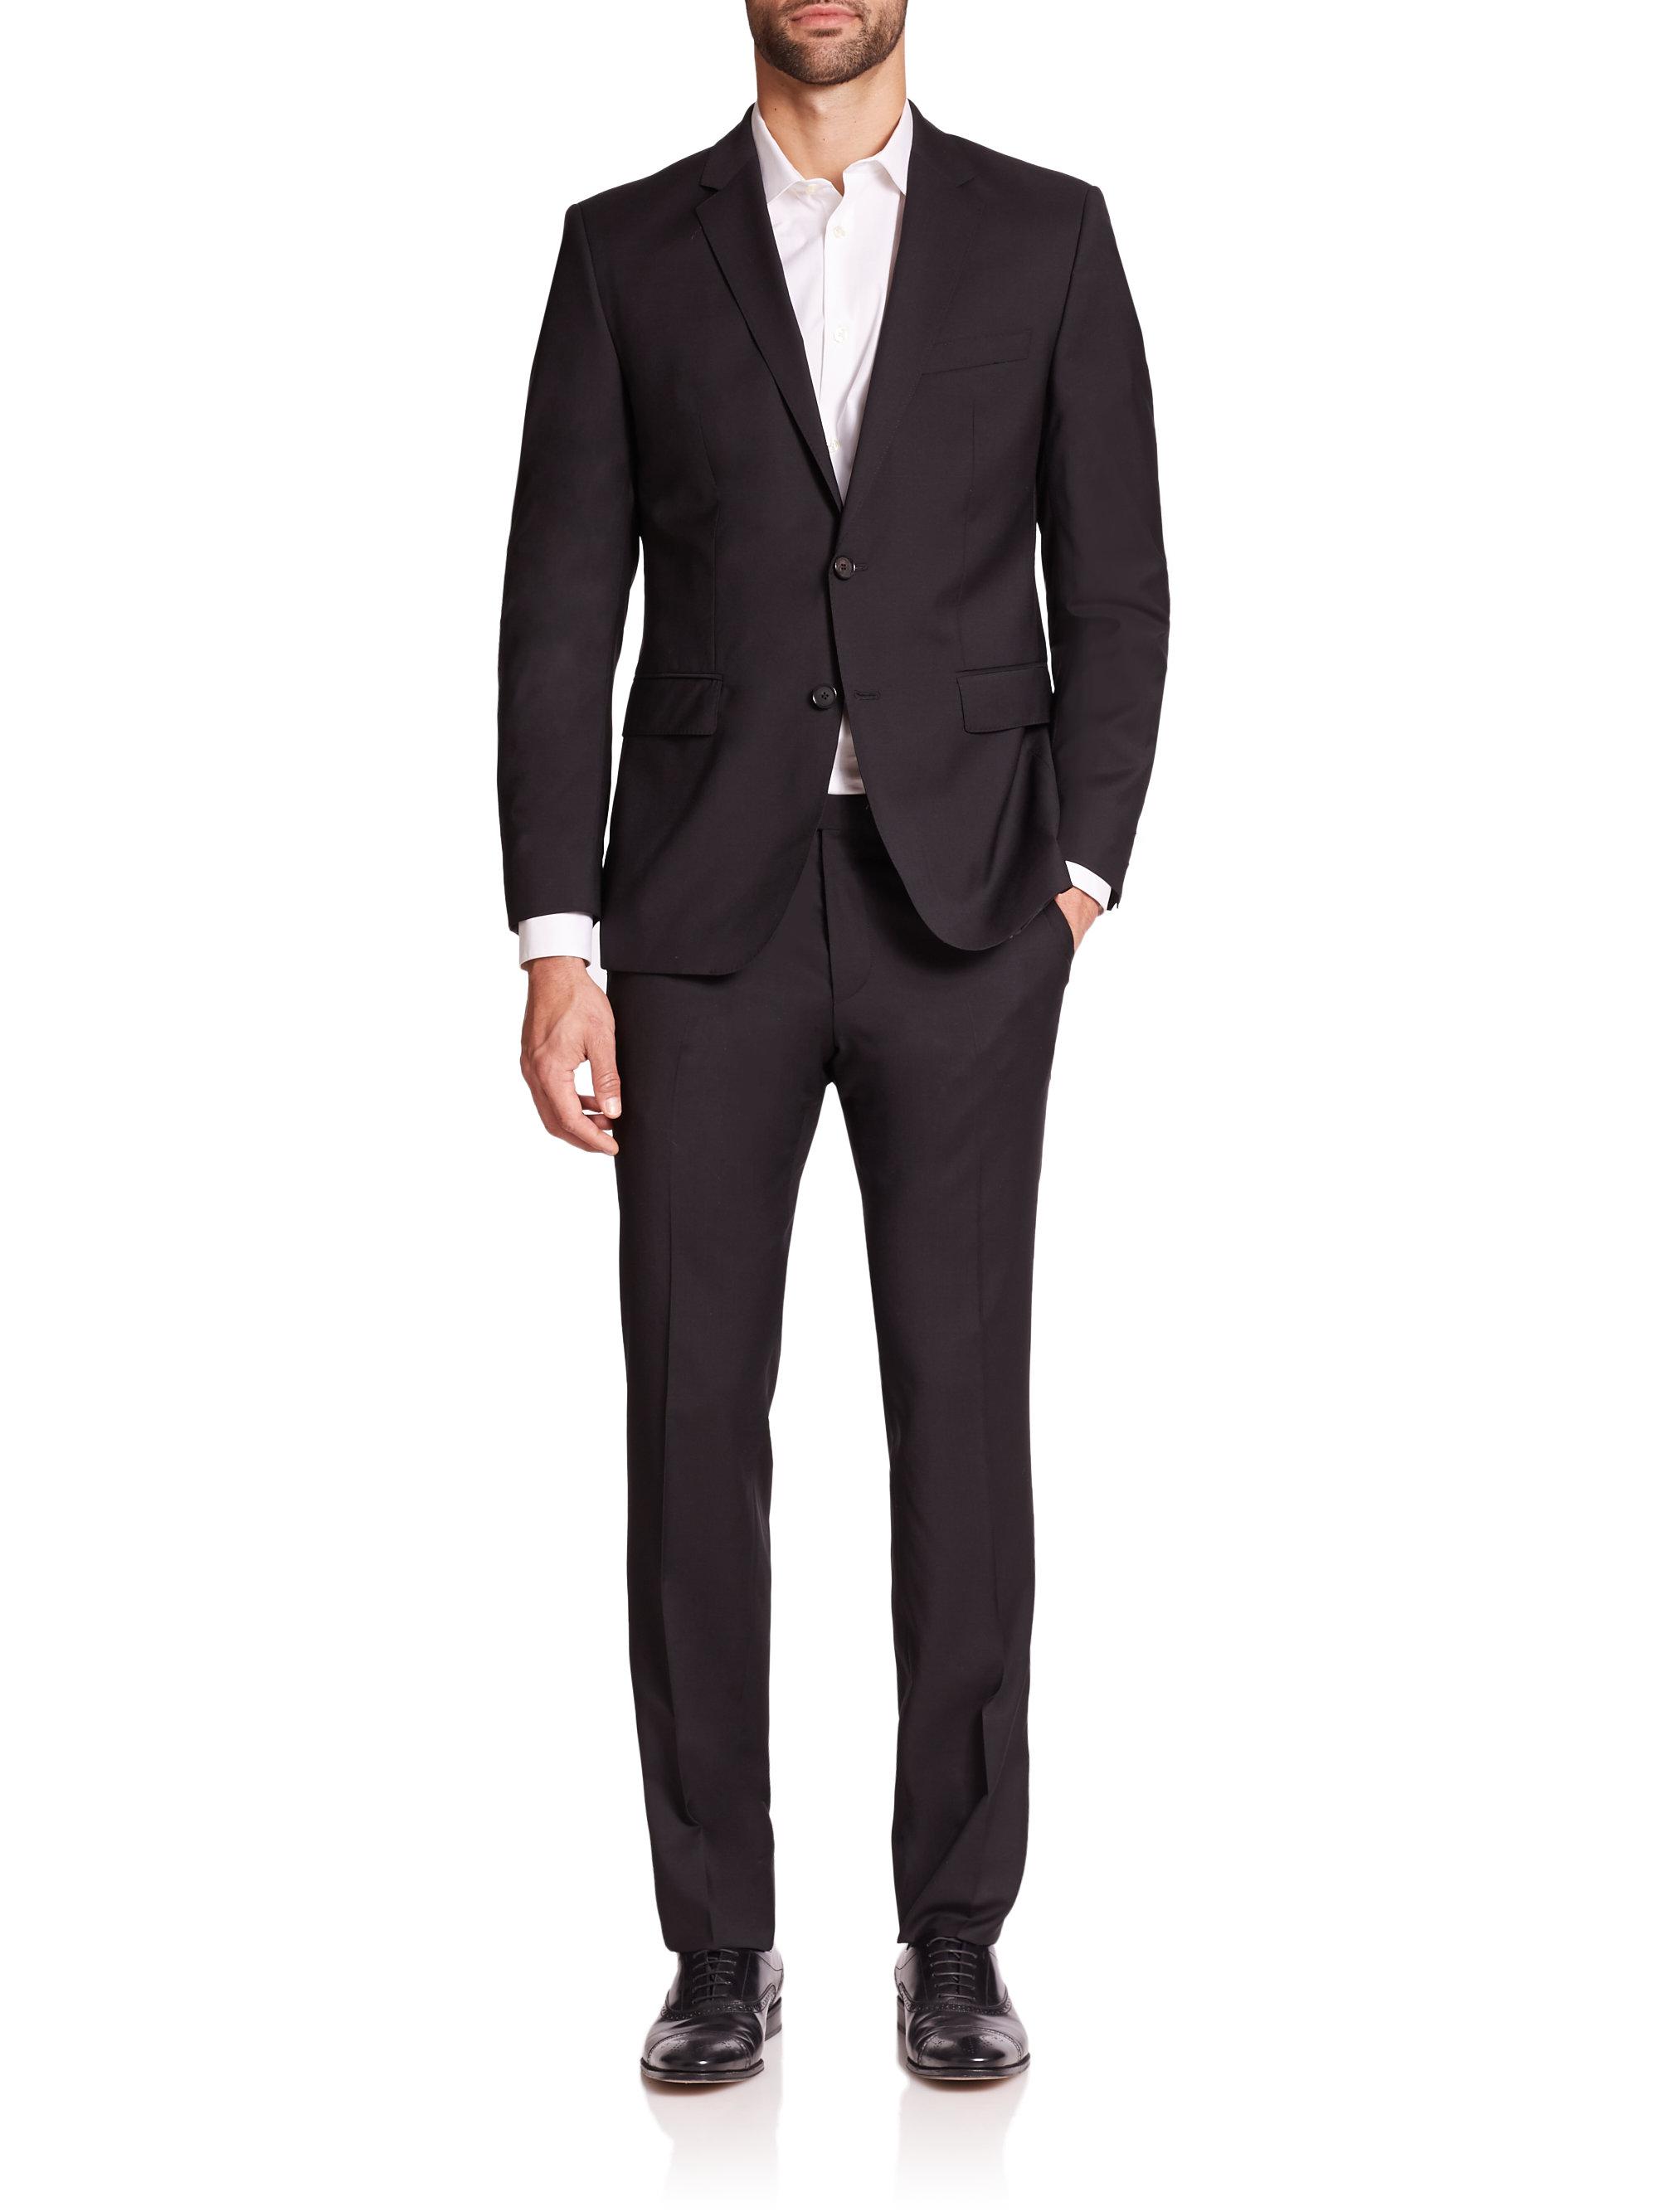 BOSS by HUGO BOSS Boss James Sharp Regular-fit Super 120 Wool Suit in Black  for Men - Lyst